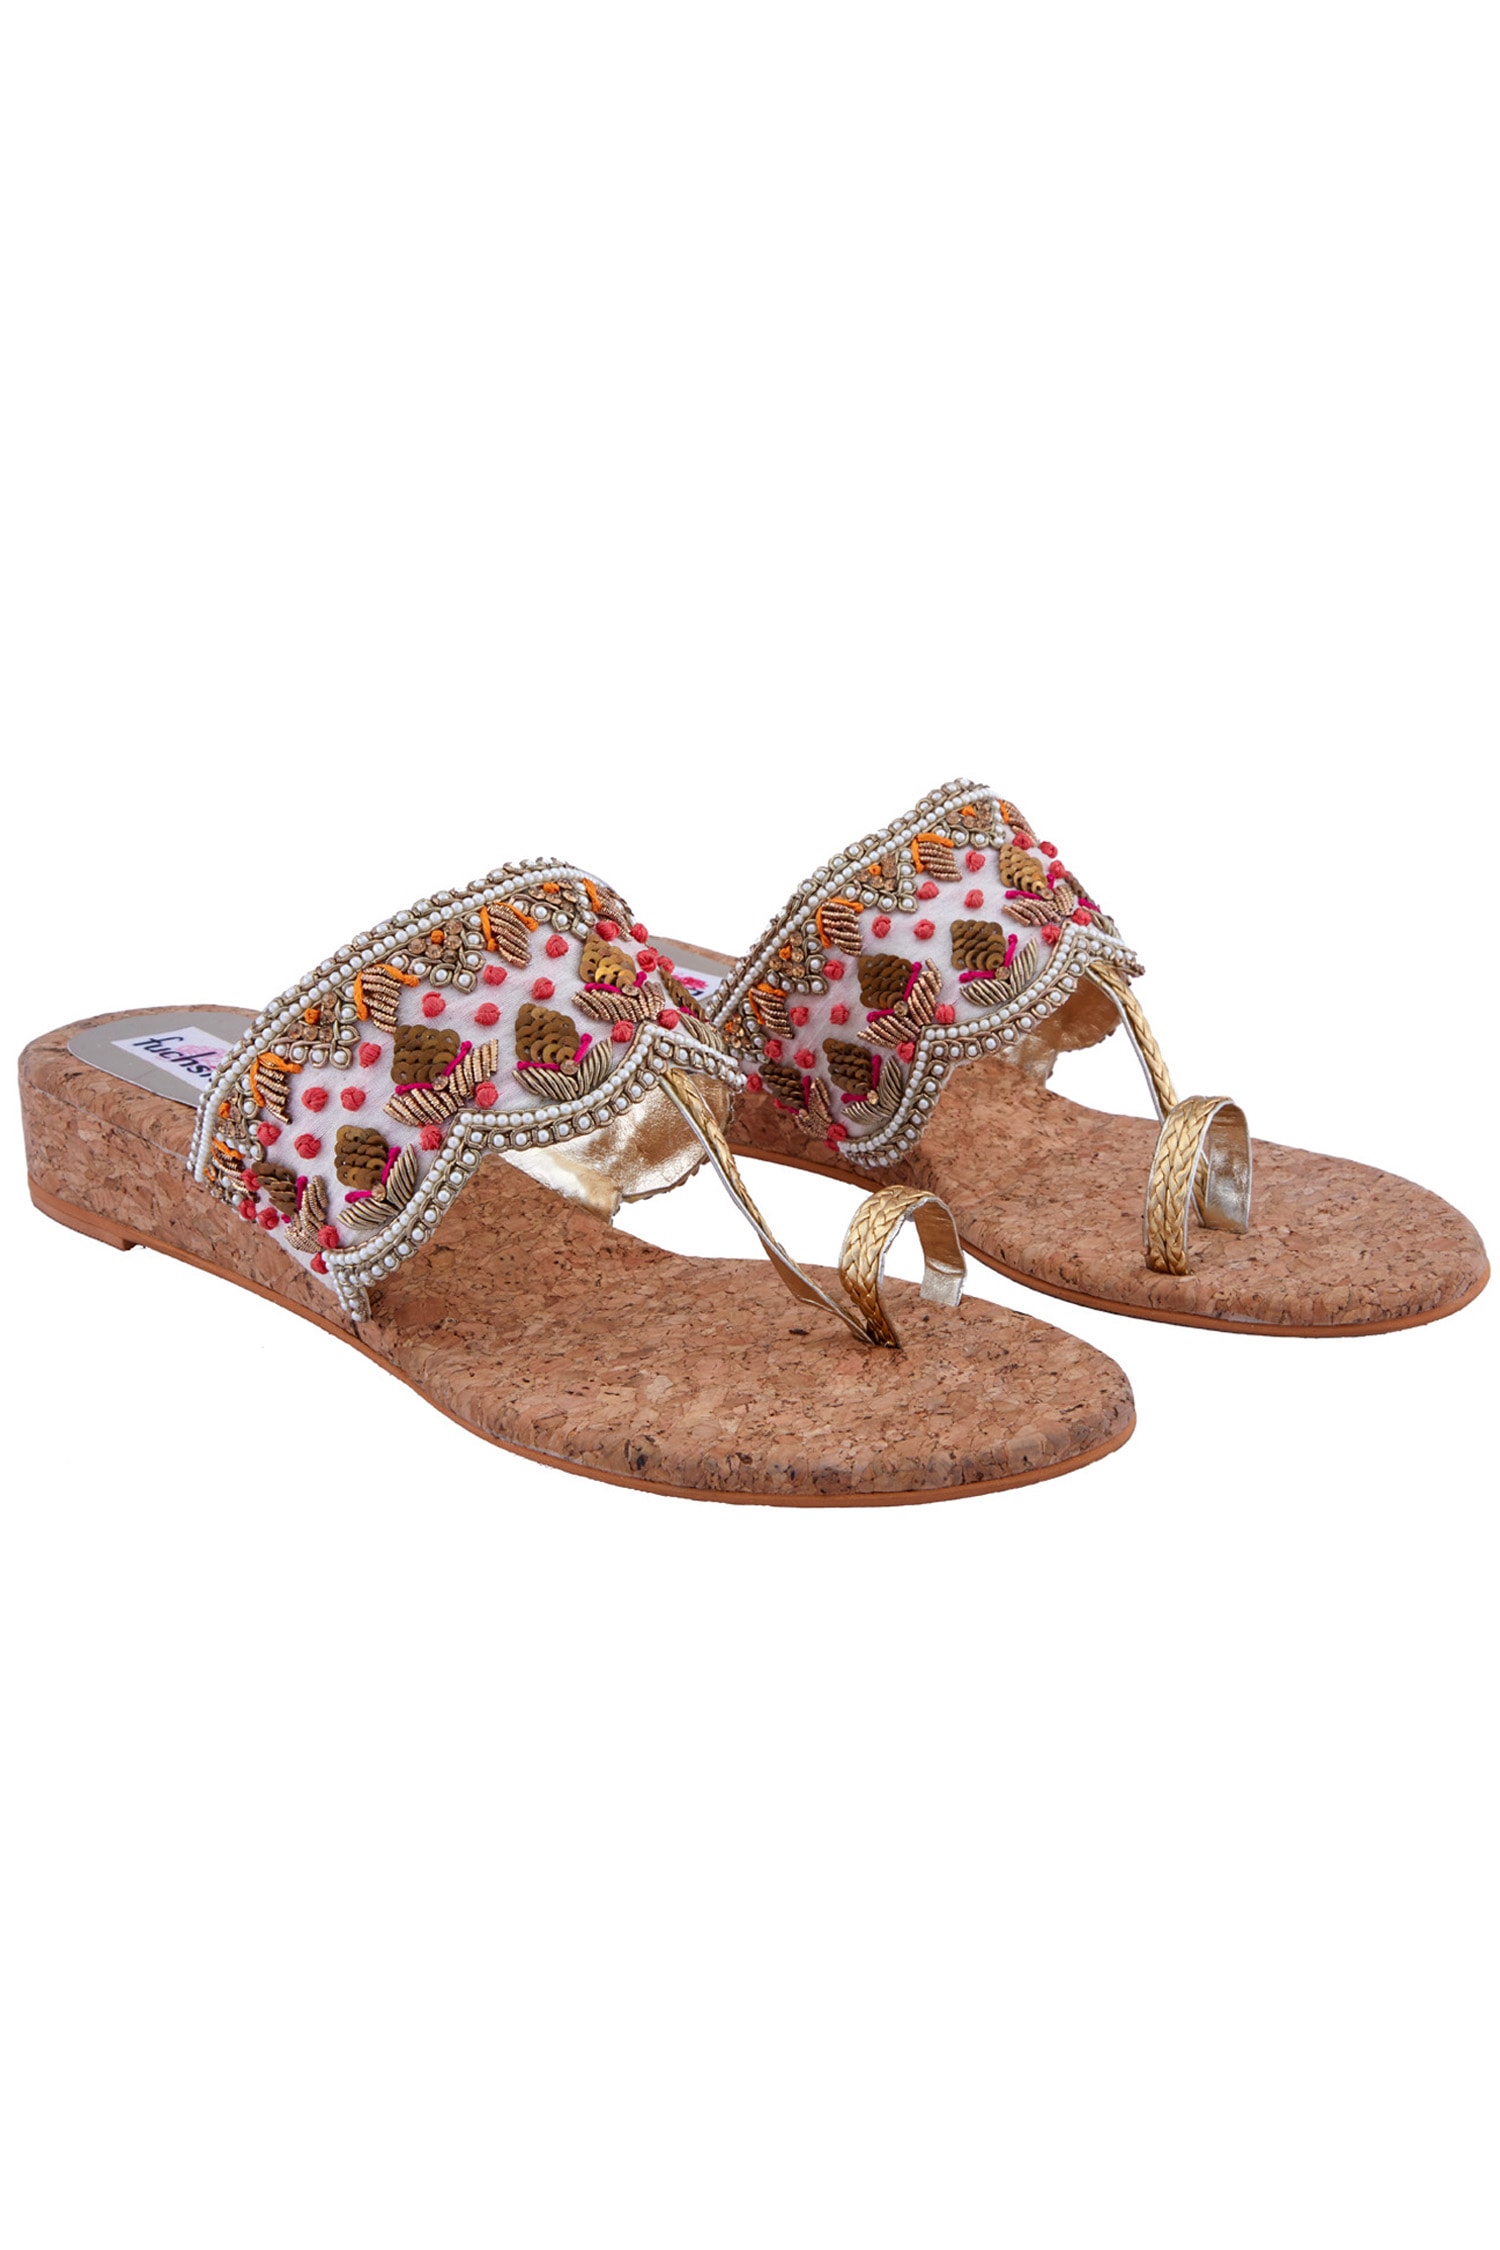 Buy Multicolored embellished kolhapuri sandals by Fuchsia at Aza Fashions